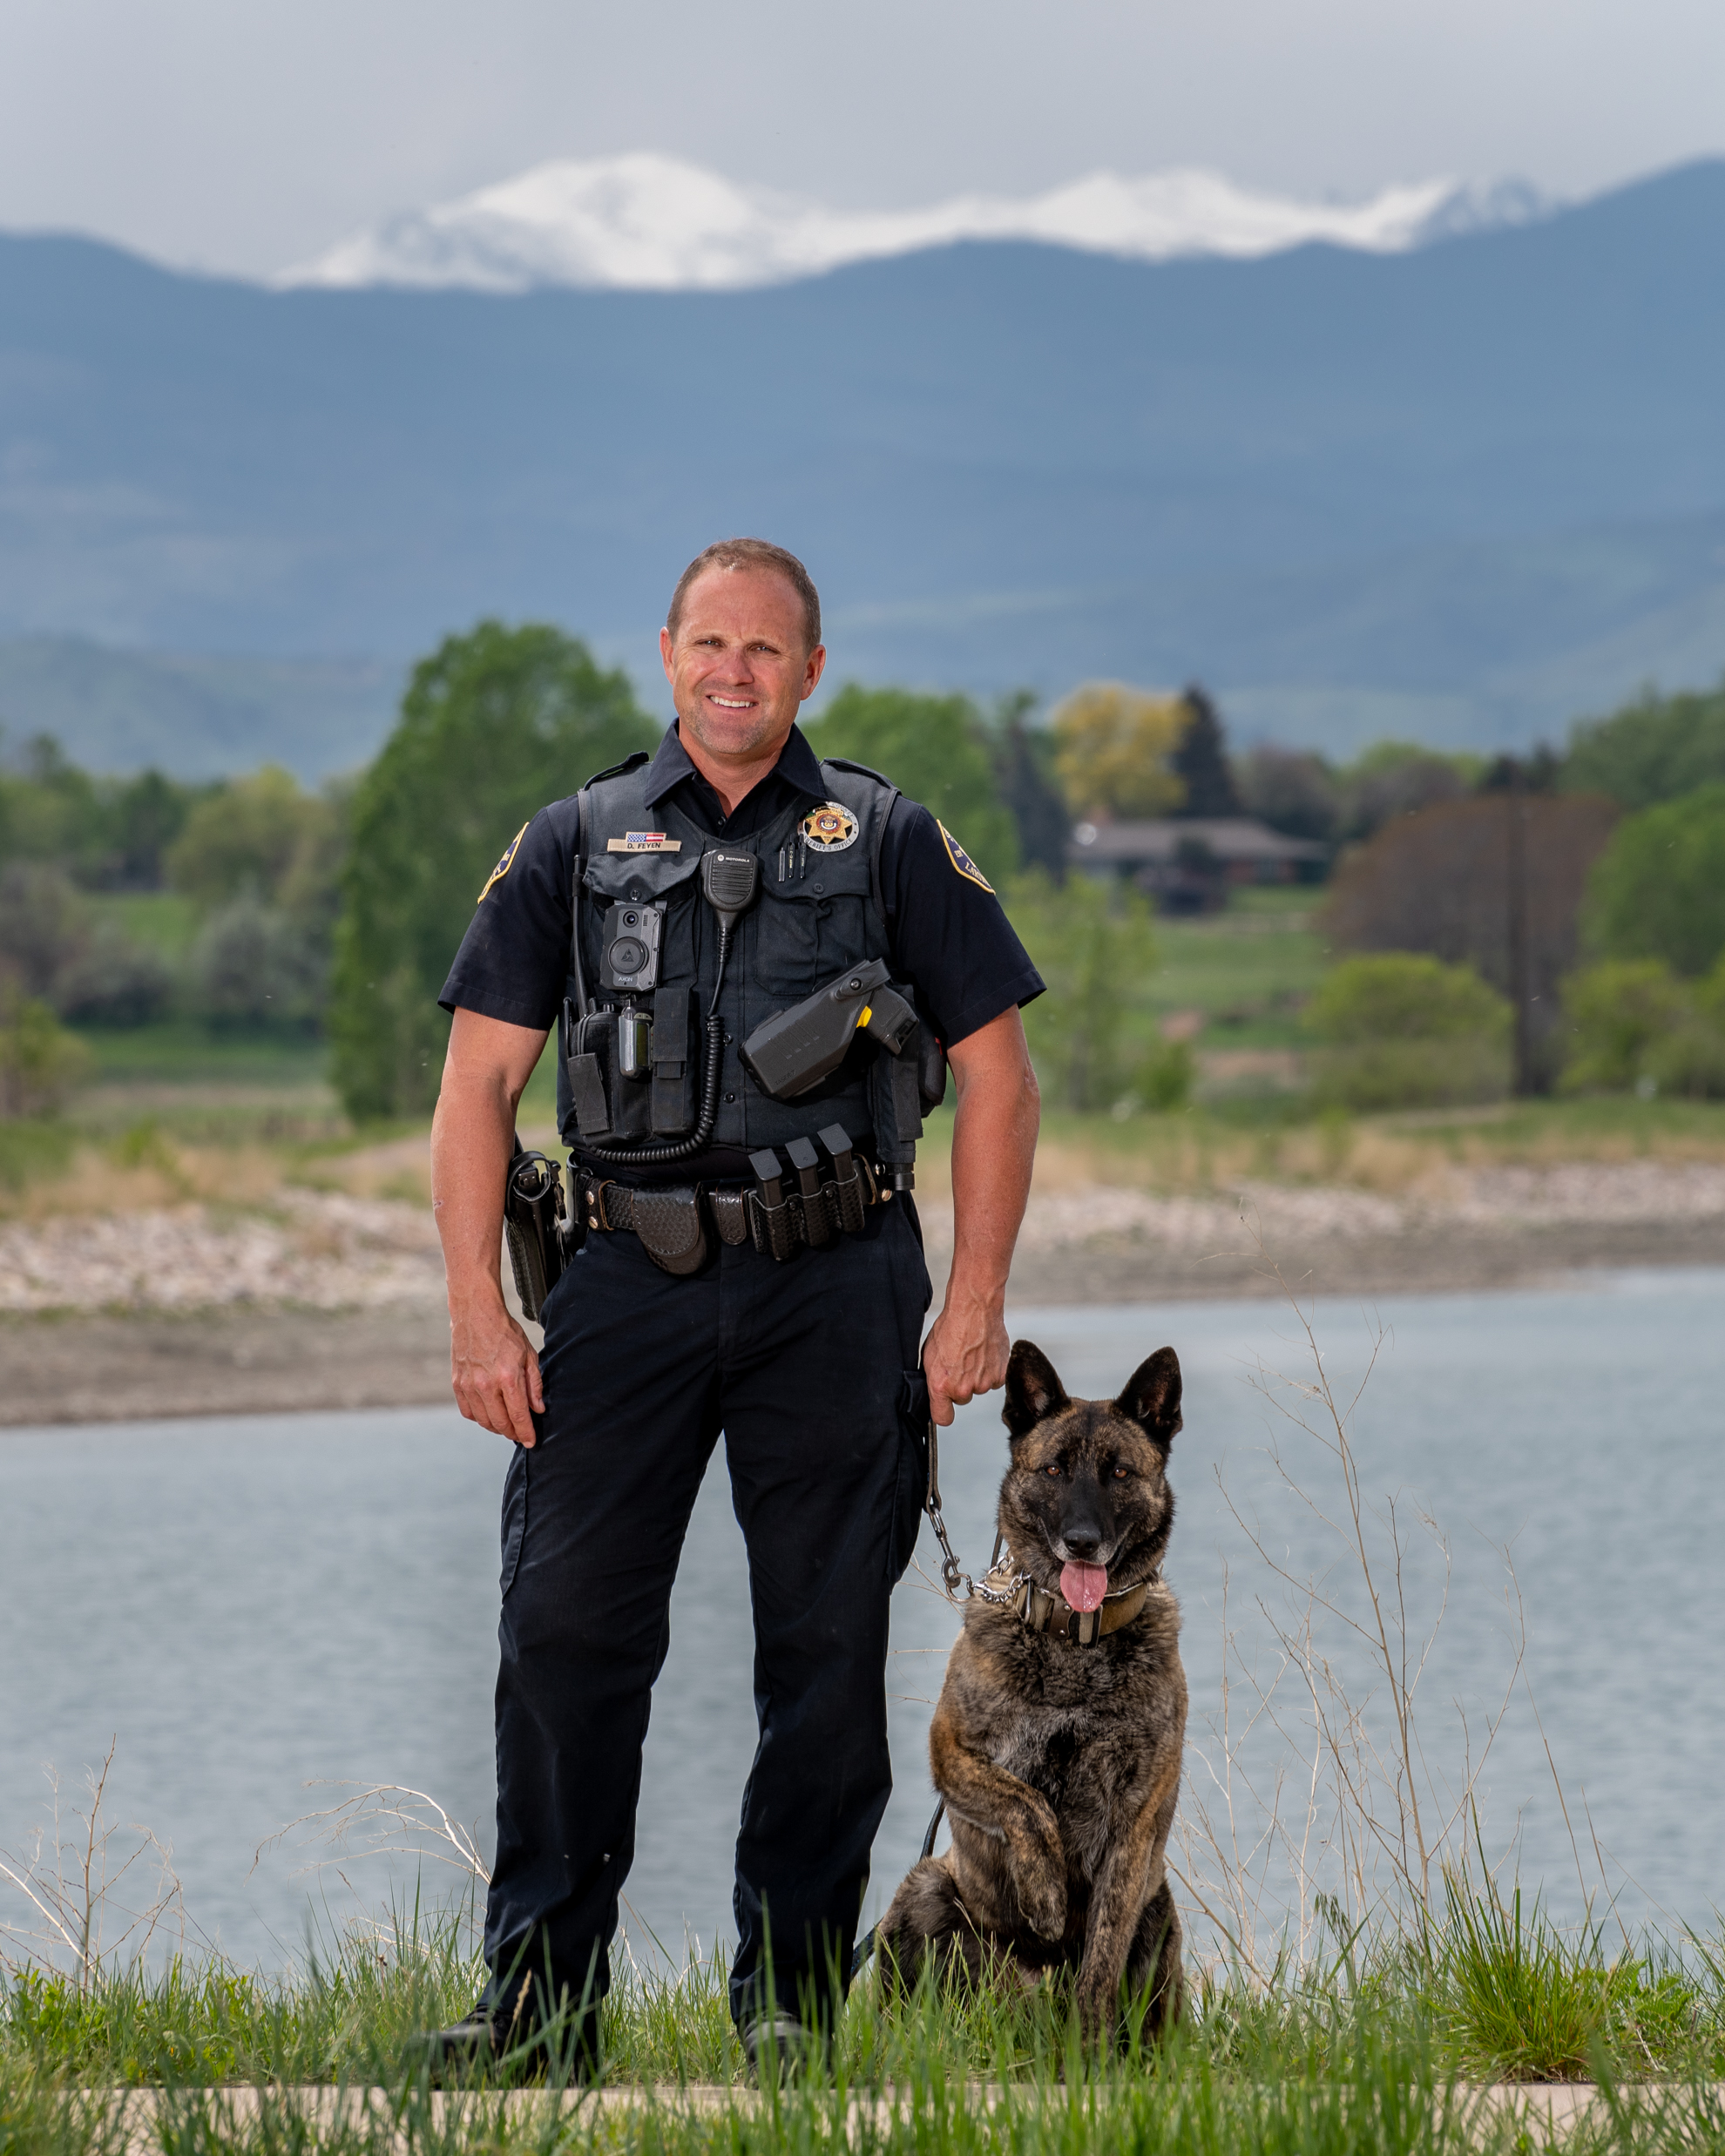 Image 2: Deputy Dave Feyen and K9 Dox (Dutch Shepherd)